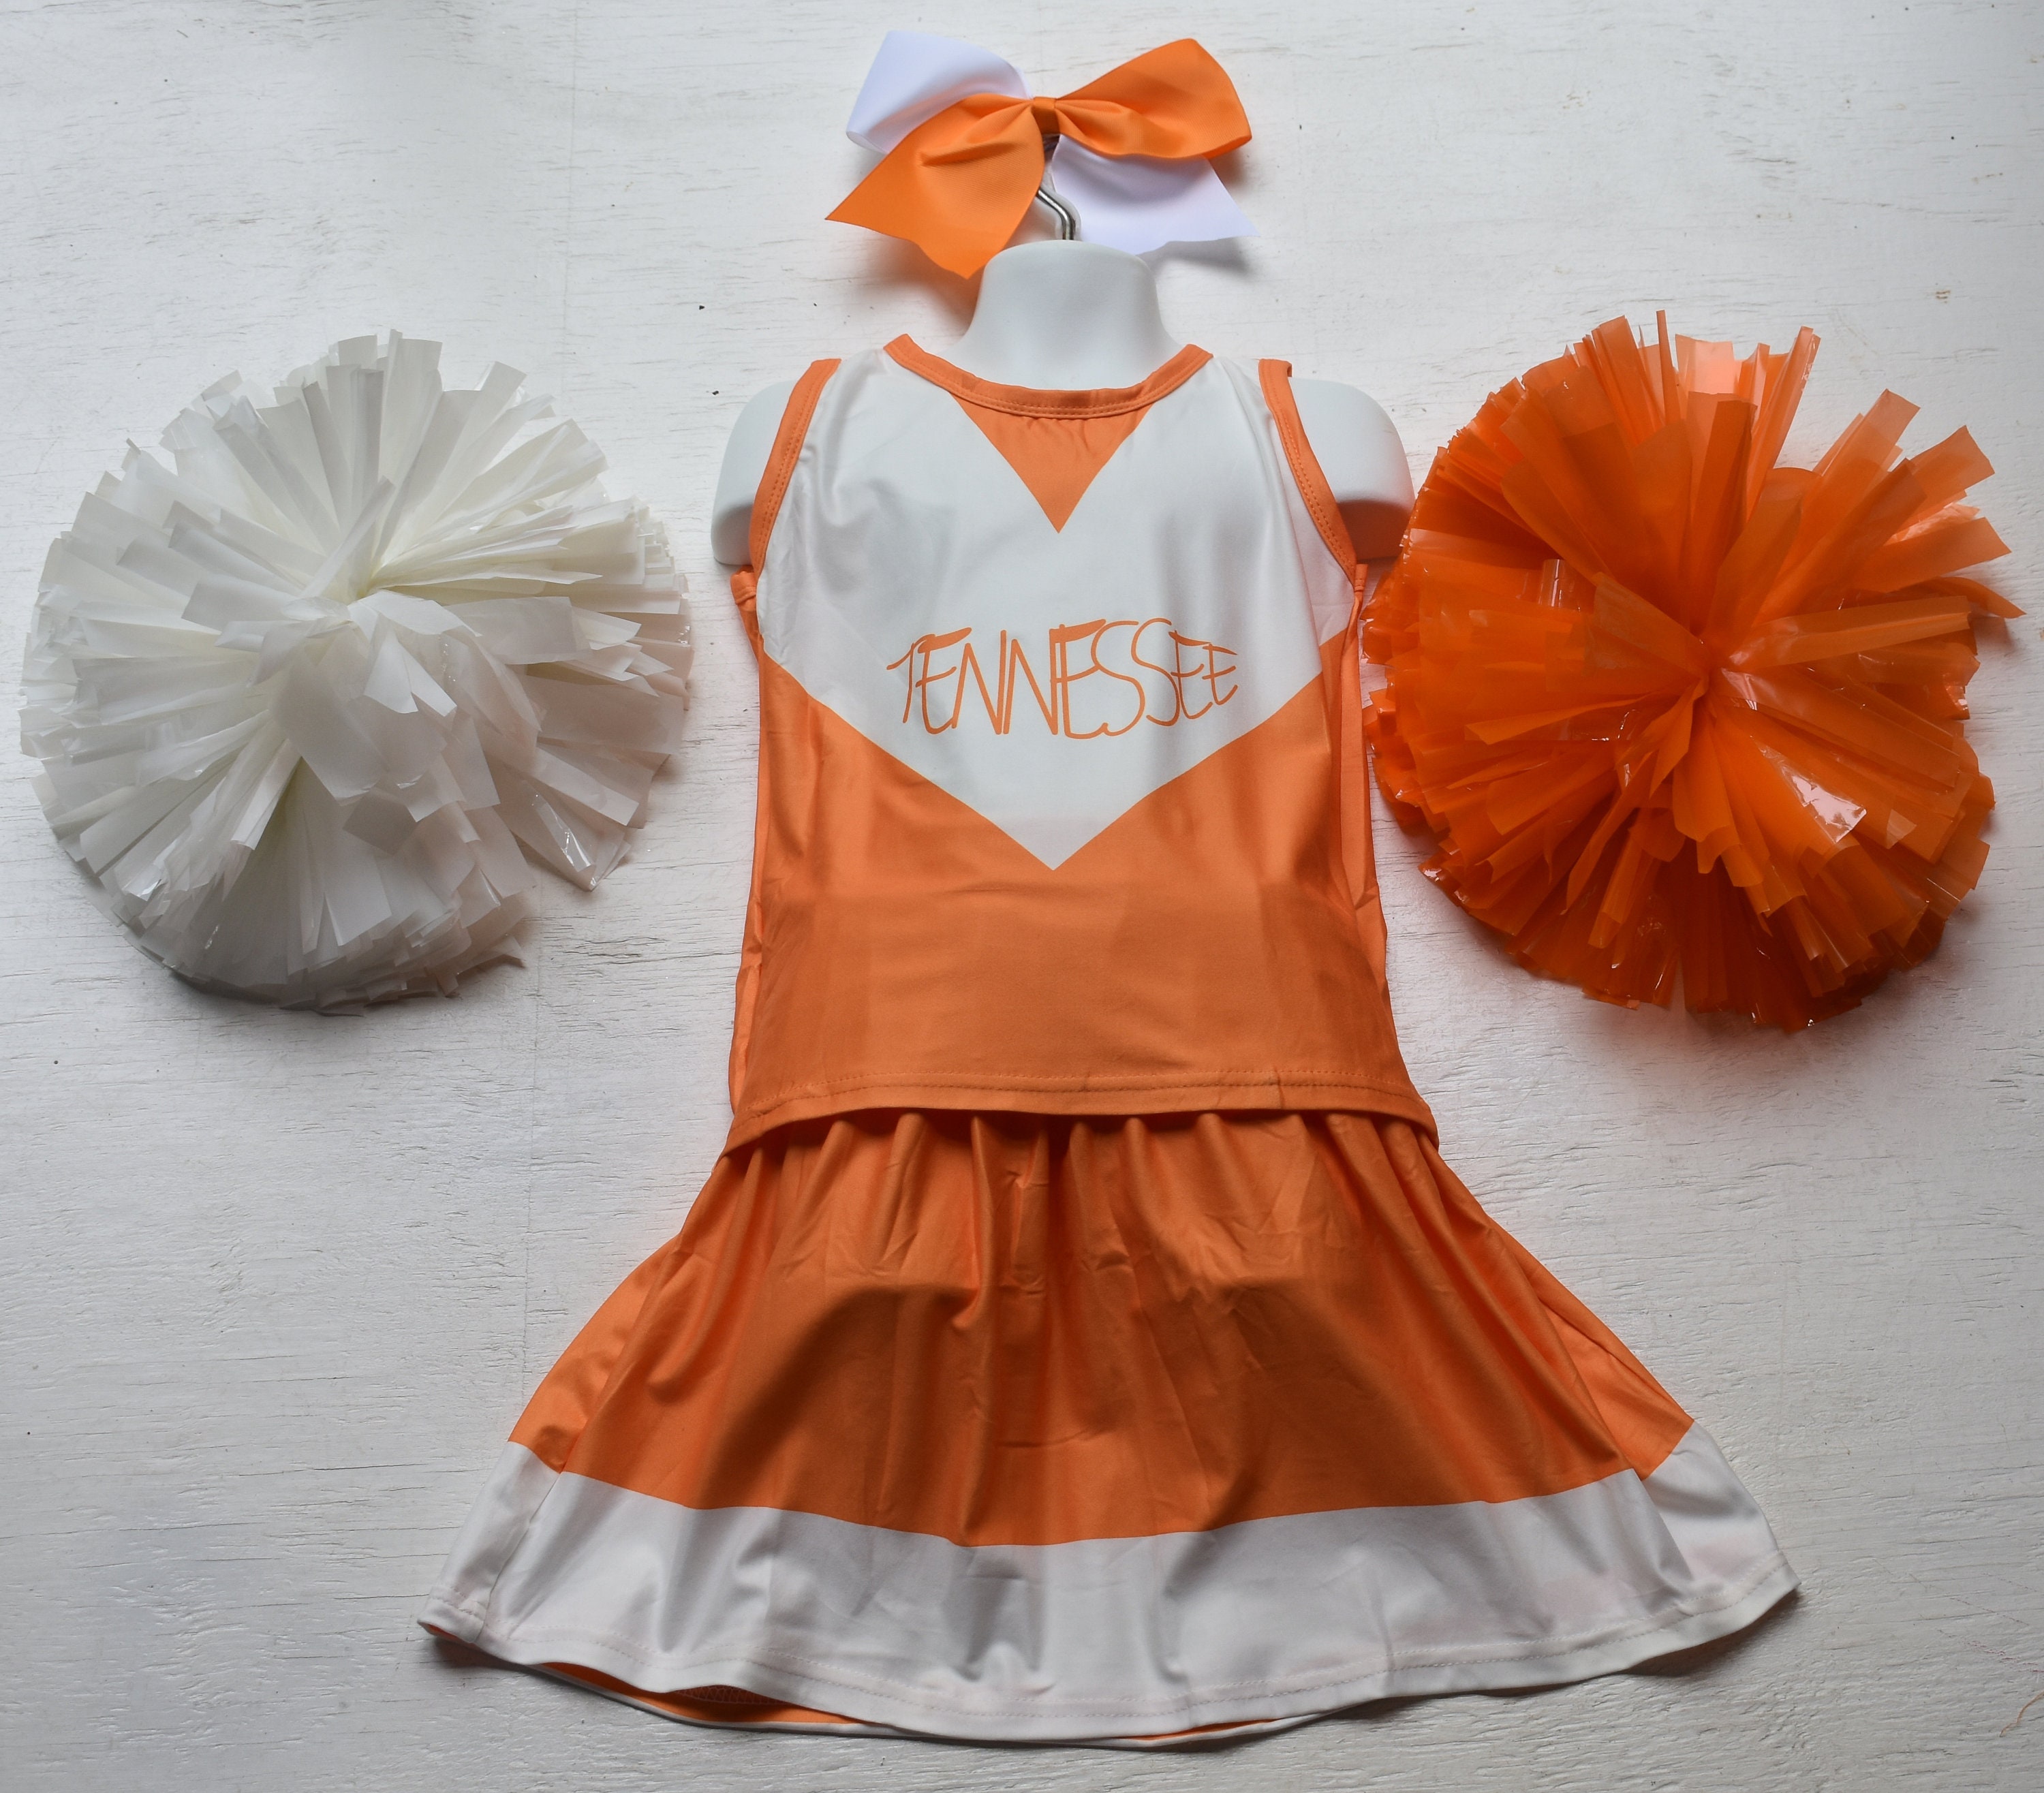 Acheter Costume de pom-pom girl brillant pour enfants filles, robe